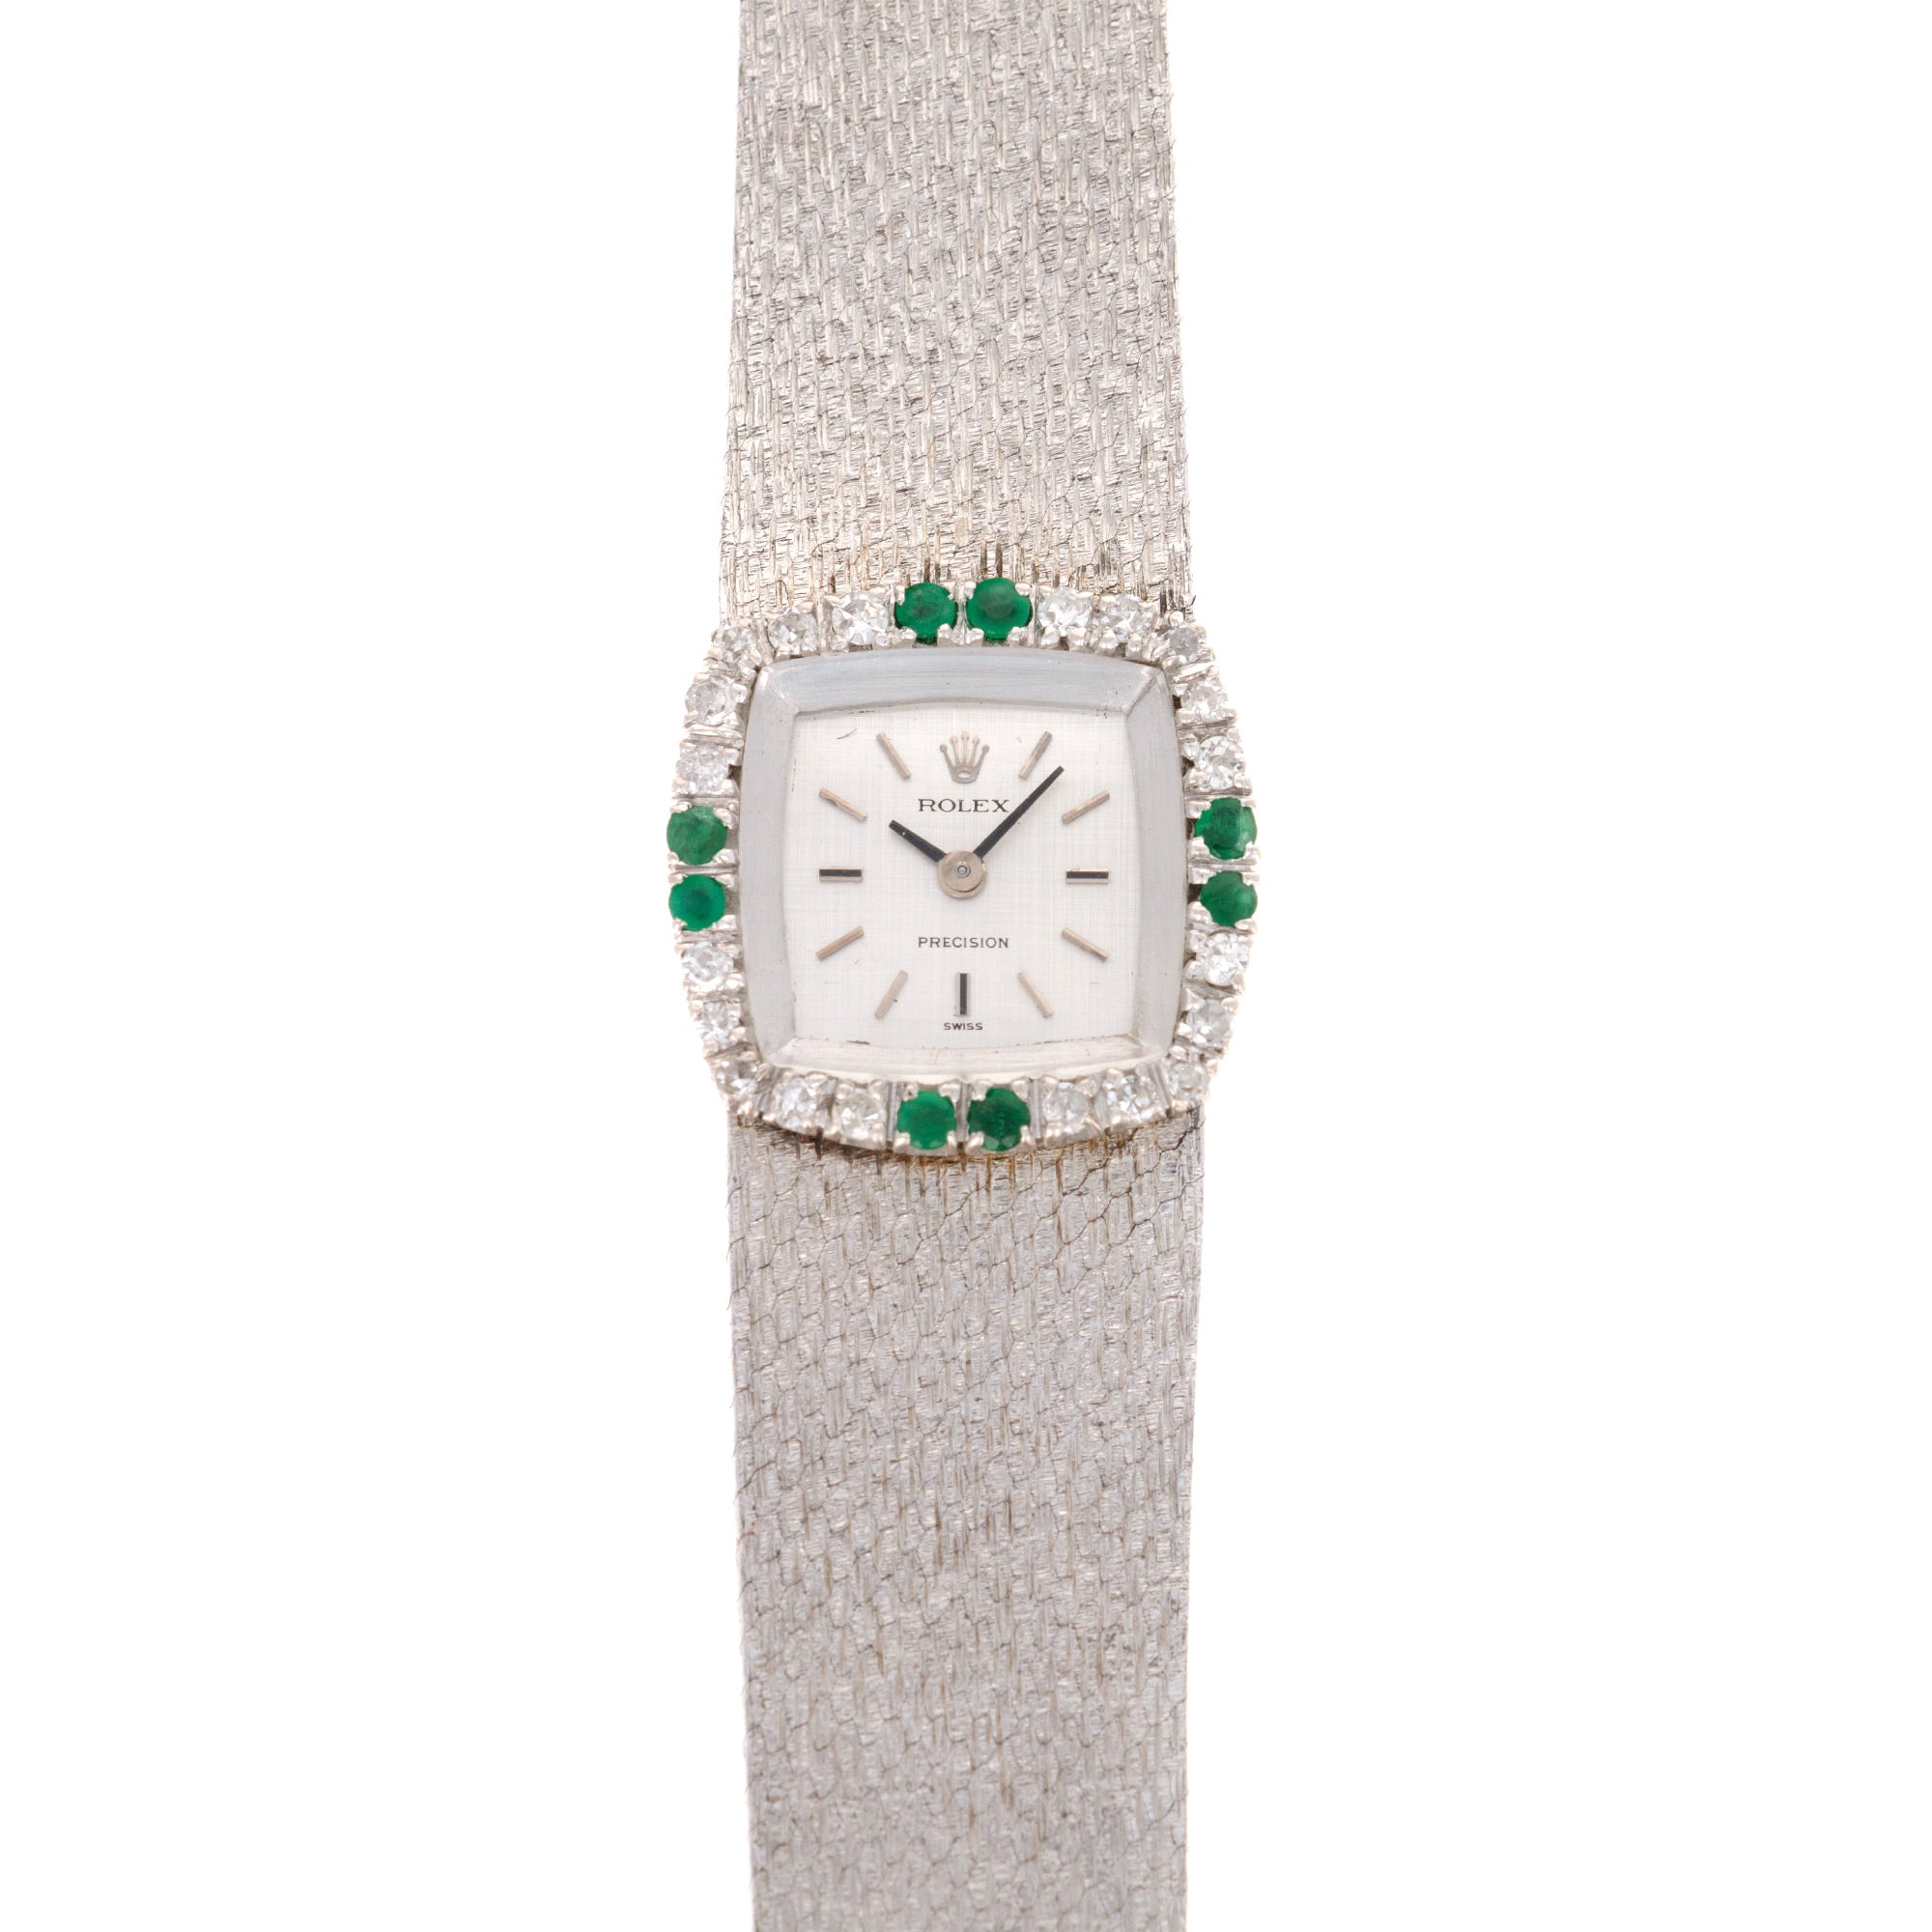 Rolex - Rolex White Gold Precision Diamond &amp; Emerald Watch Ref. 2628 - The Keystone Watches